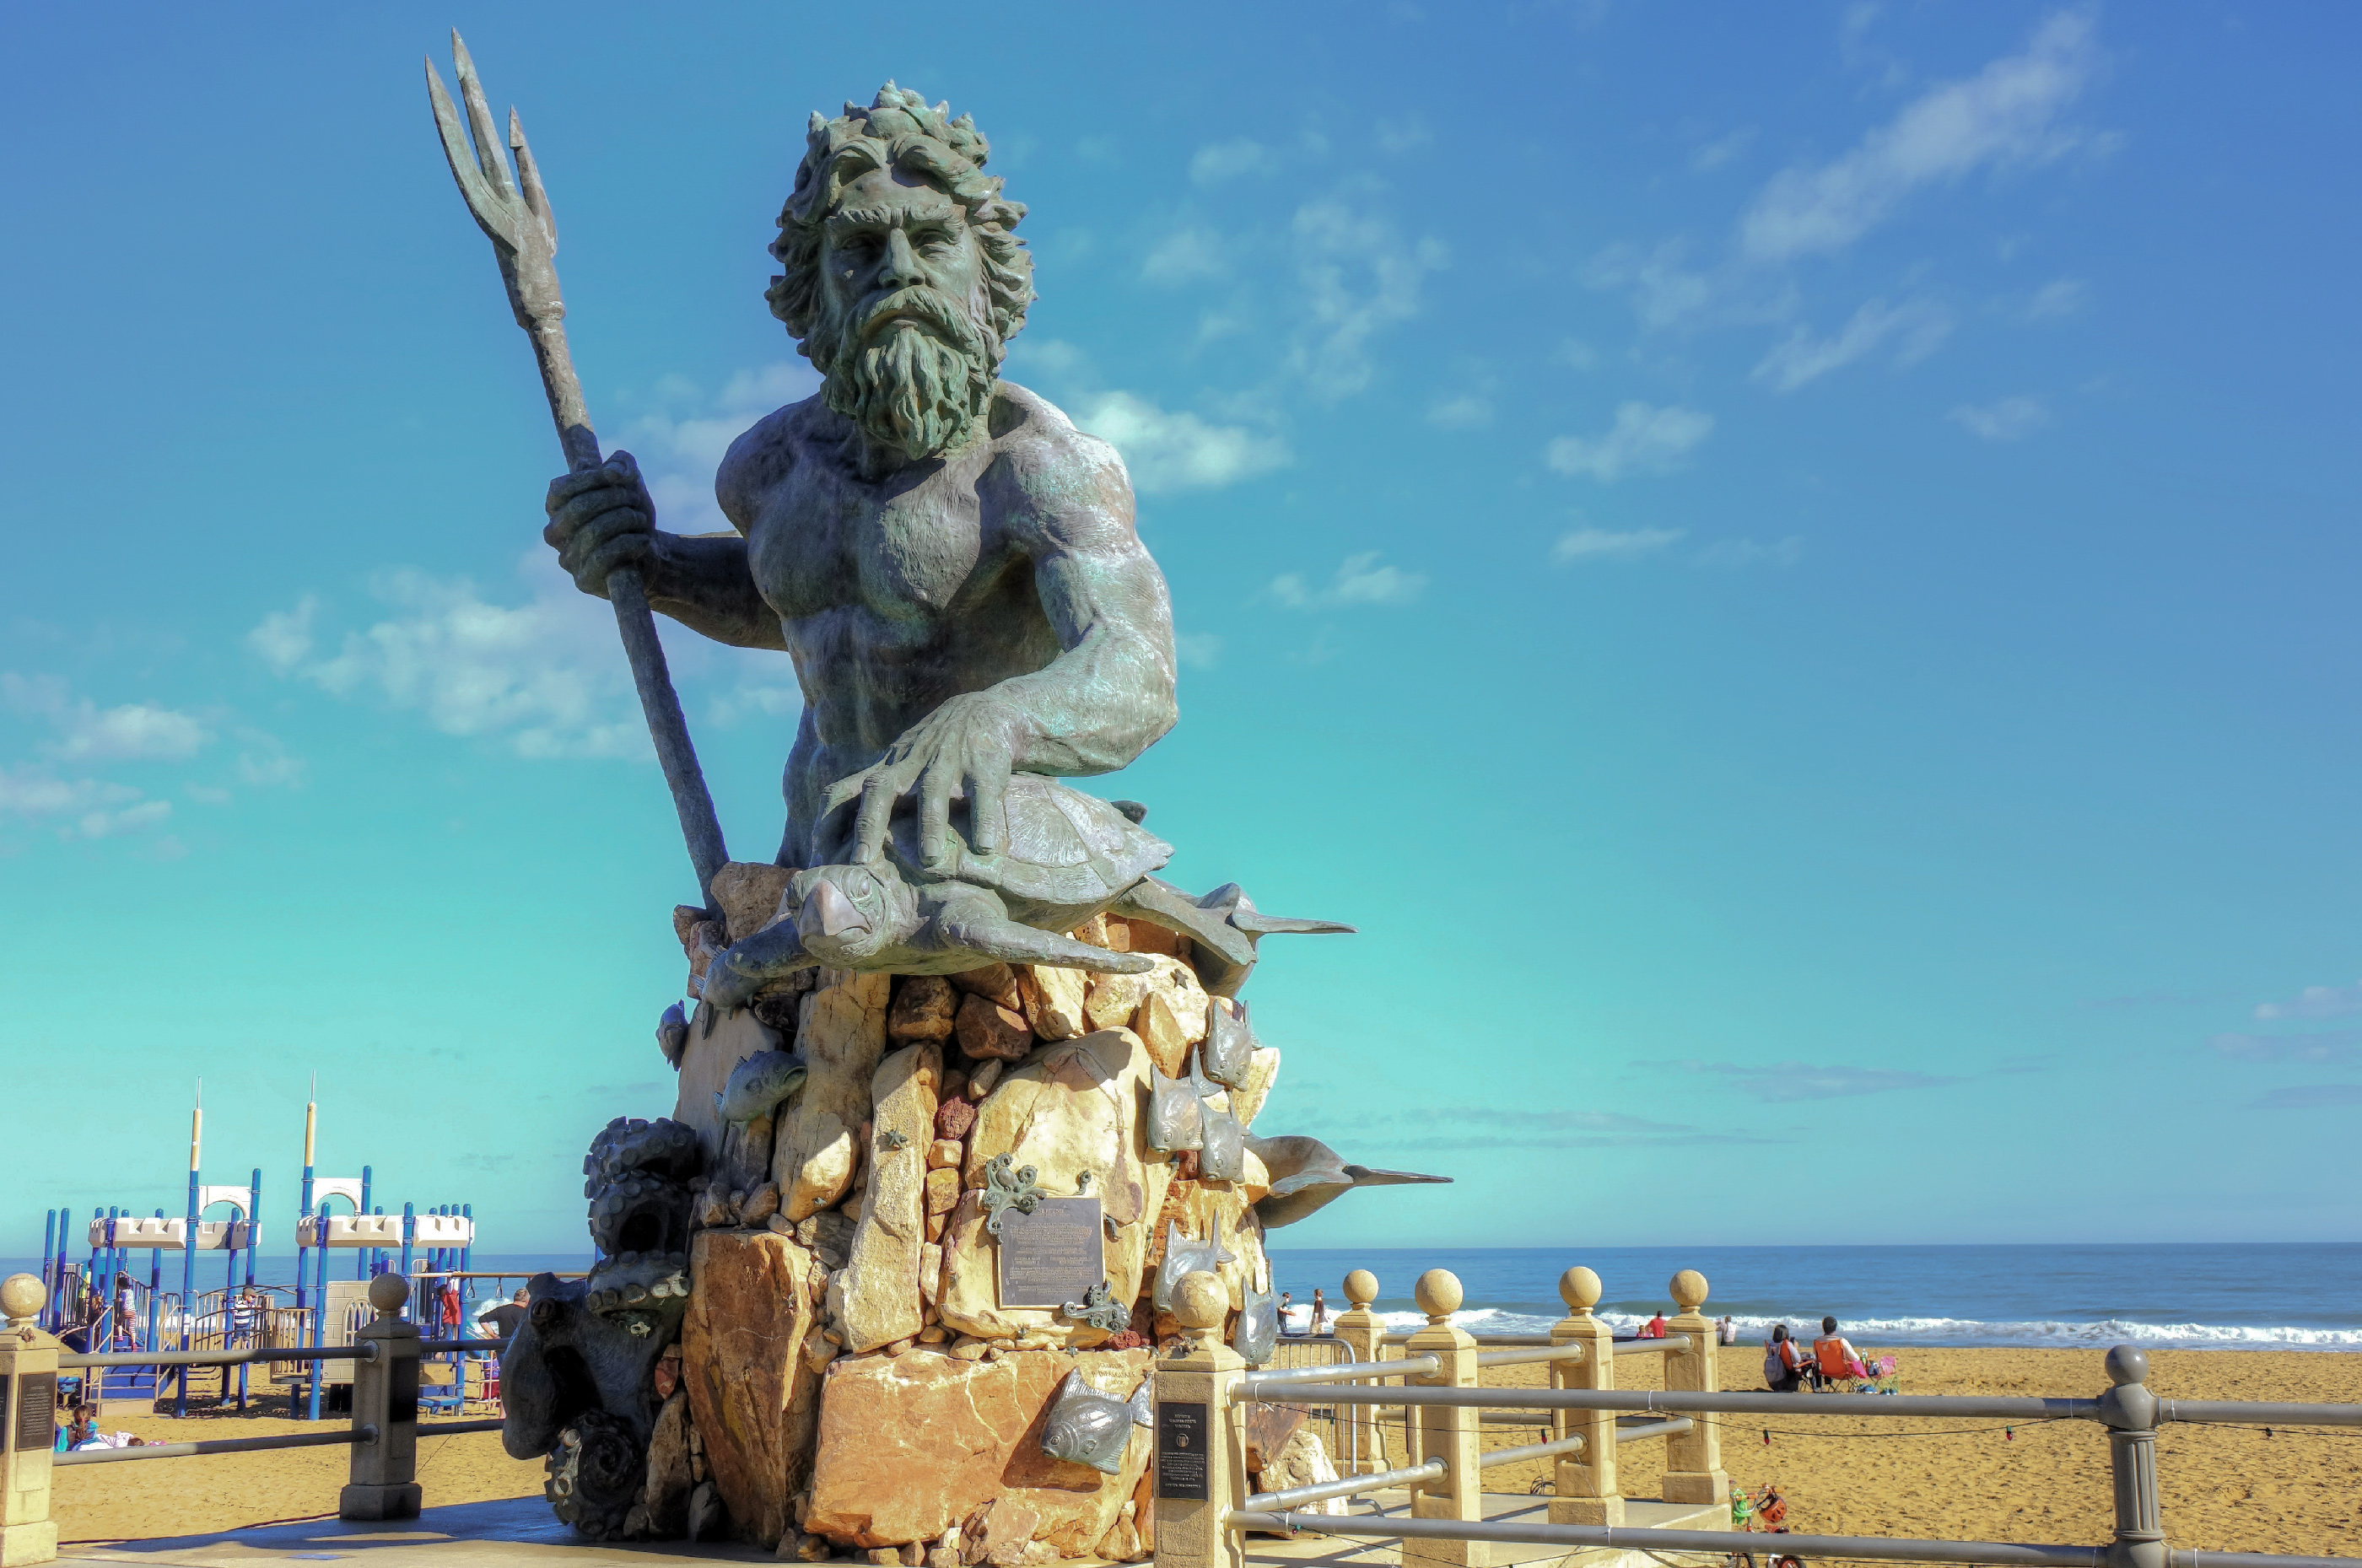 The statue of King Neptune, Virginia Beach Boardwalk